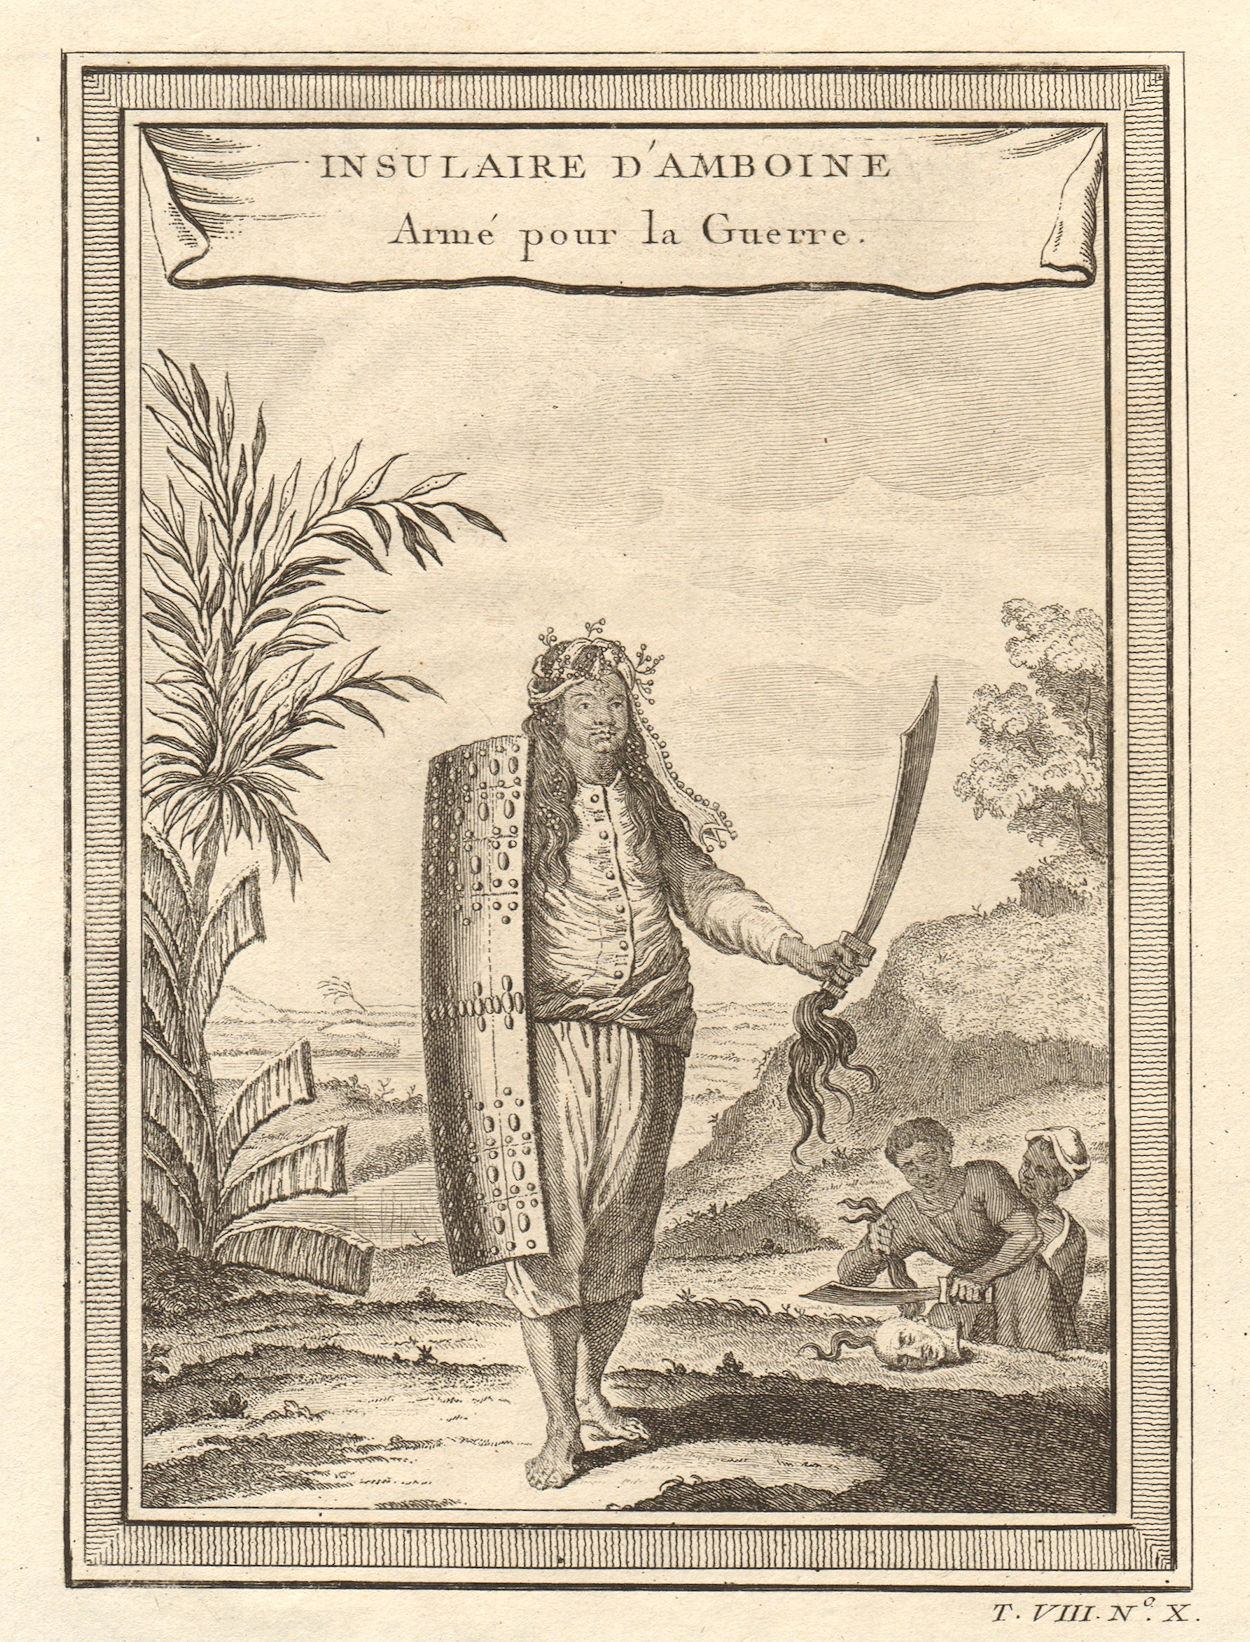 Associate Product Armed Ambon islander. Moluccas / Maluku, Indonesia. Dismembered head. Sword 1750